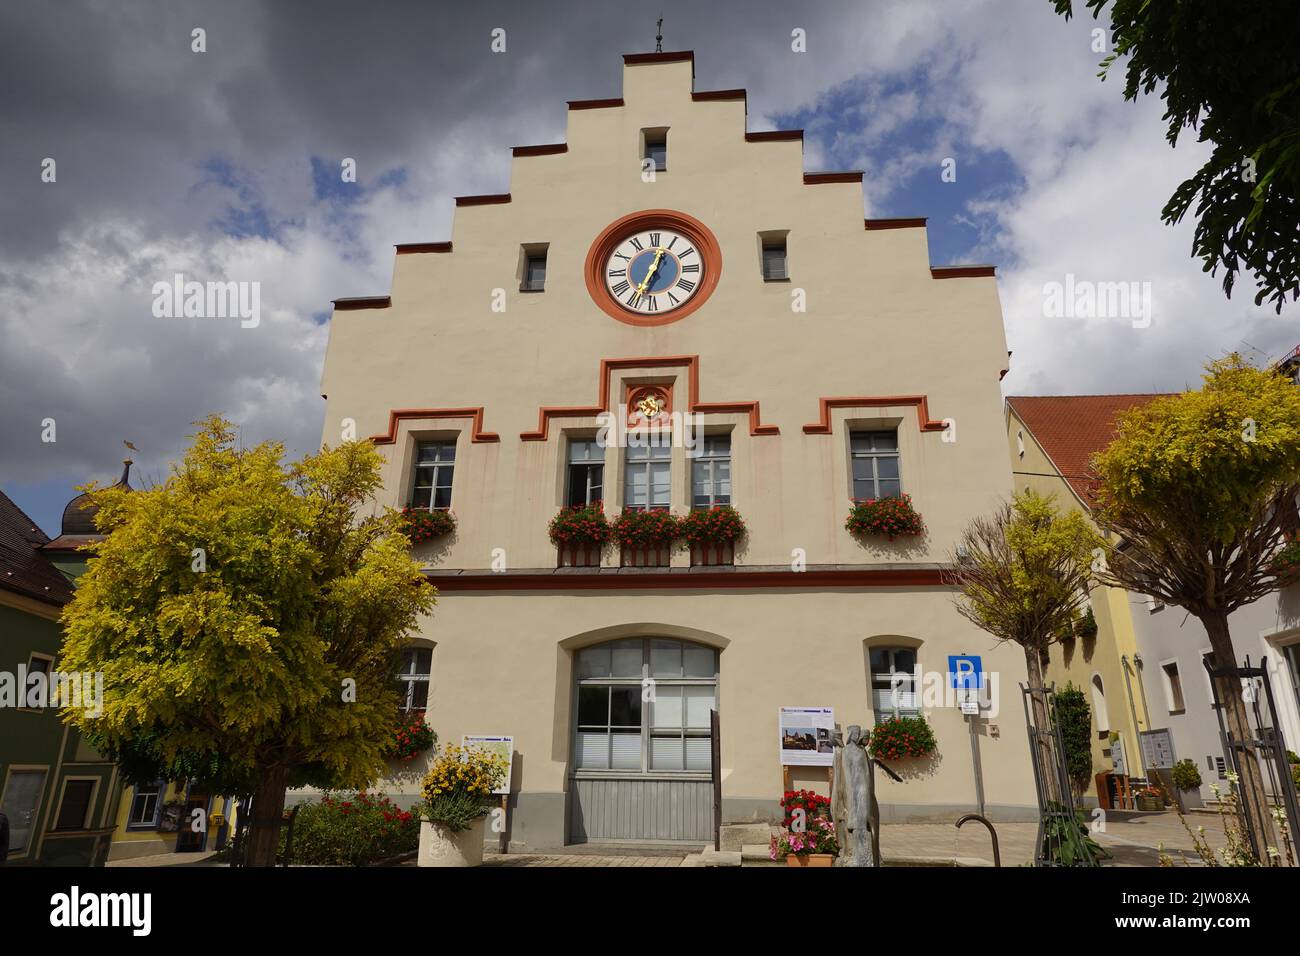 Town Hall in main square Velburg, Bavaria, Germany. Stock Photo